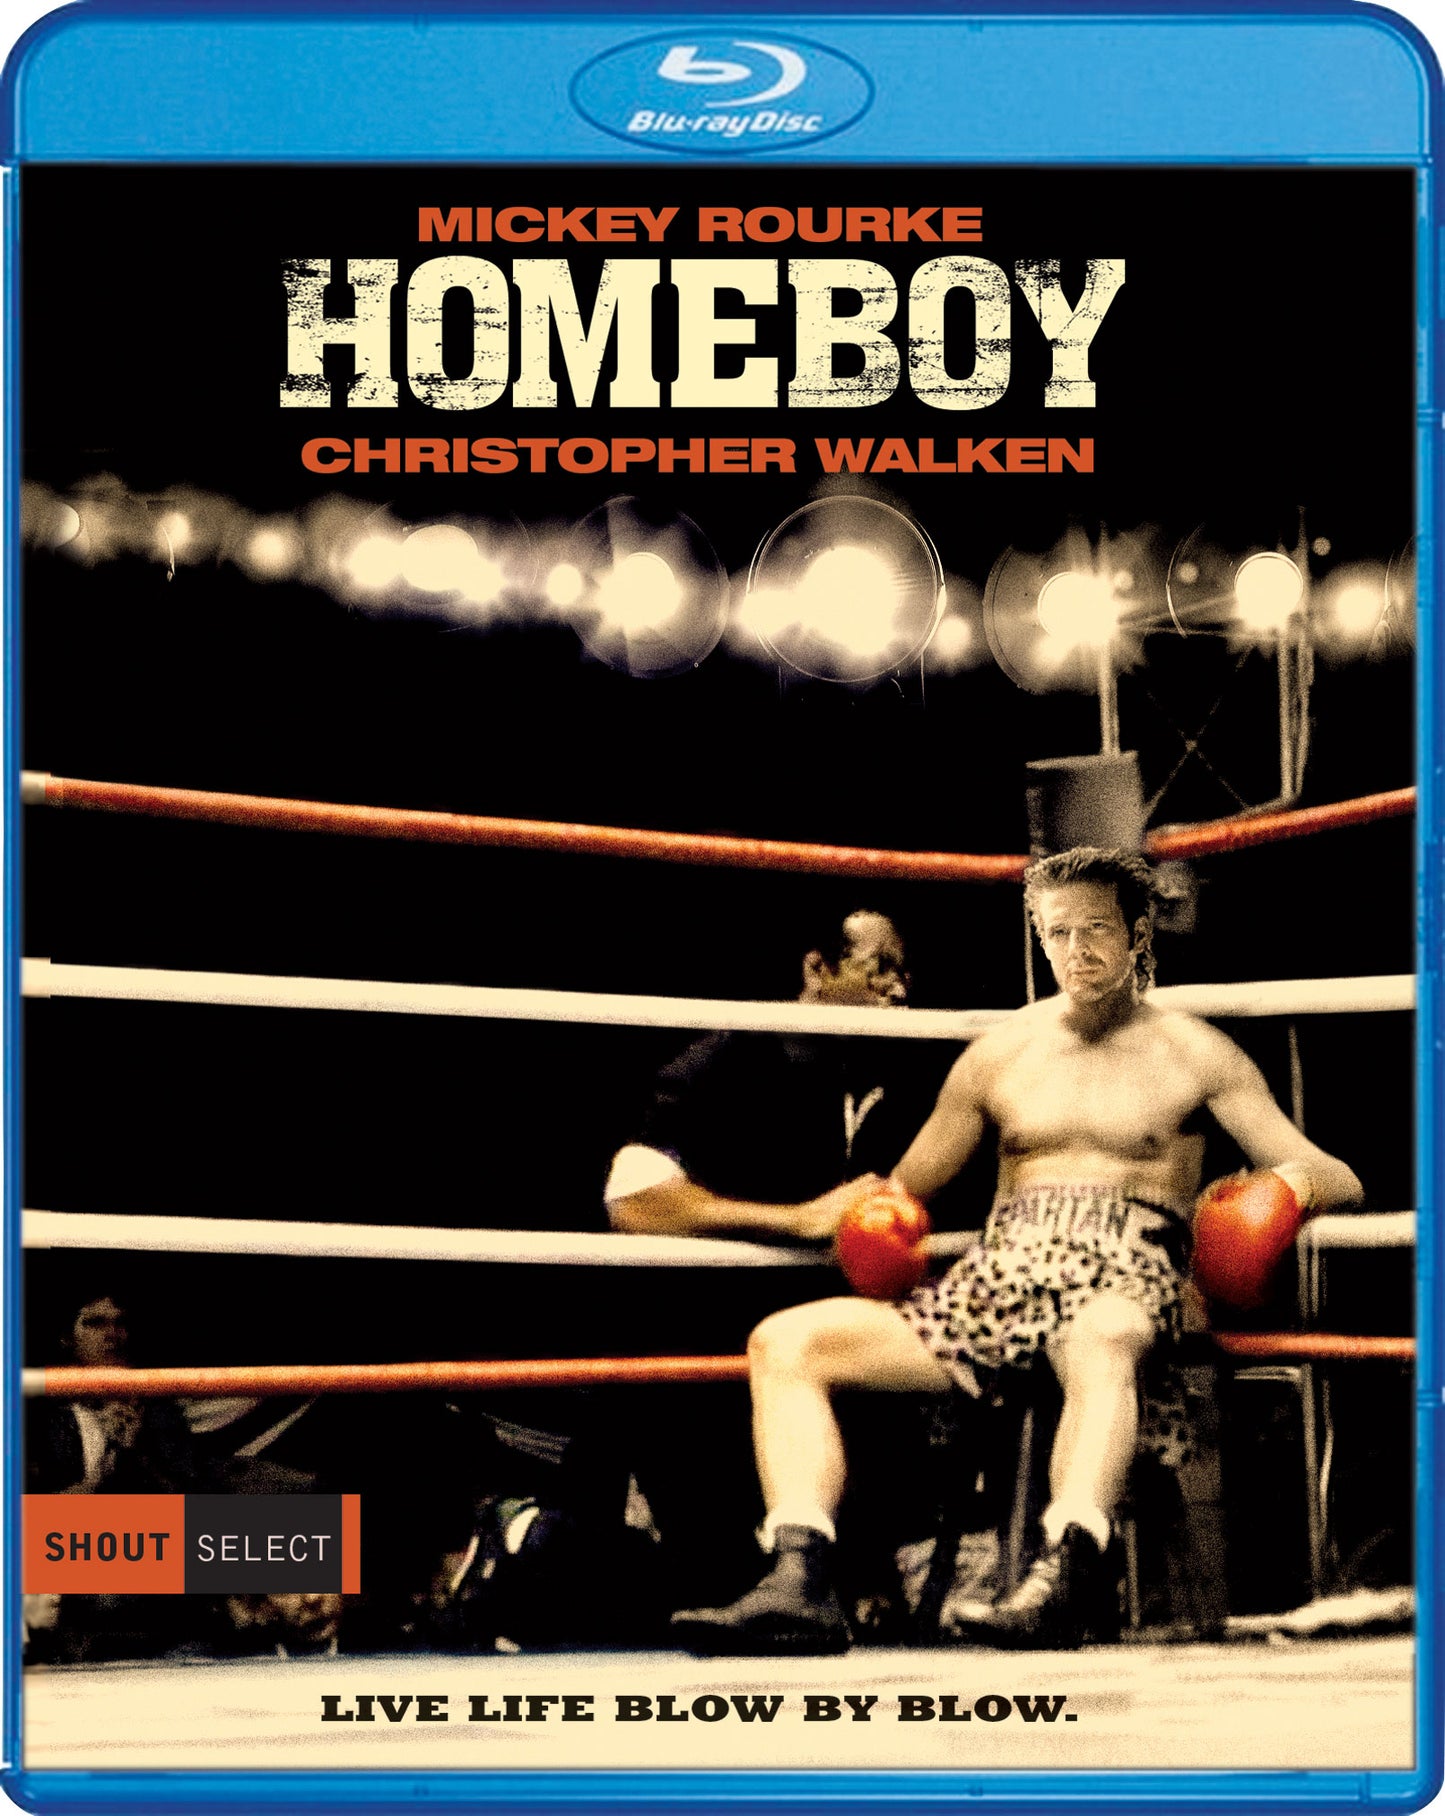 Homeboy [Blu-ray] cover art